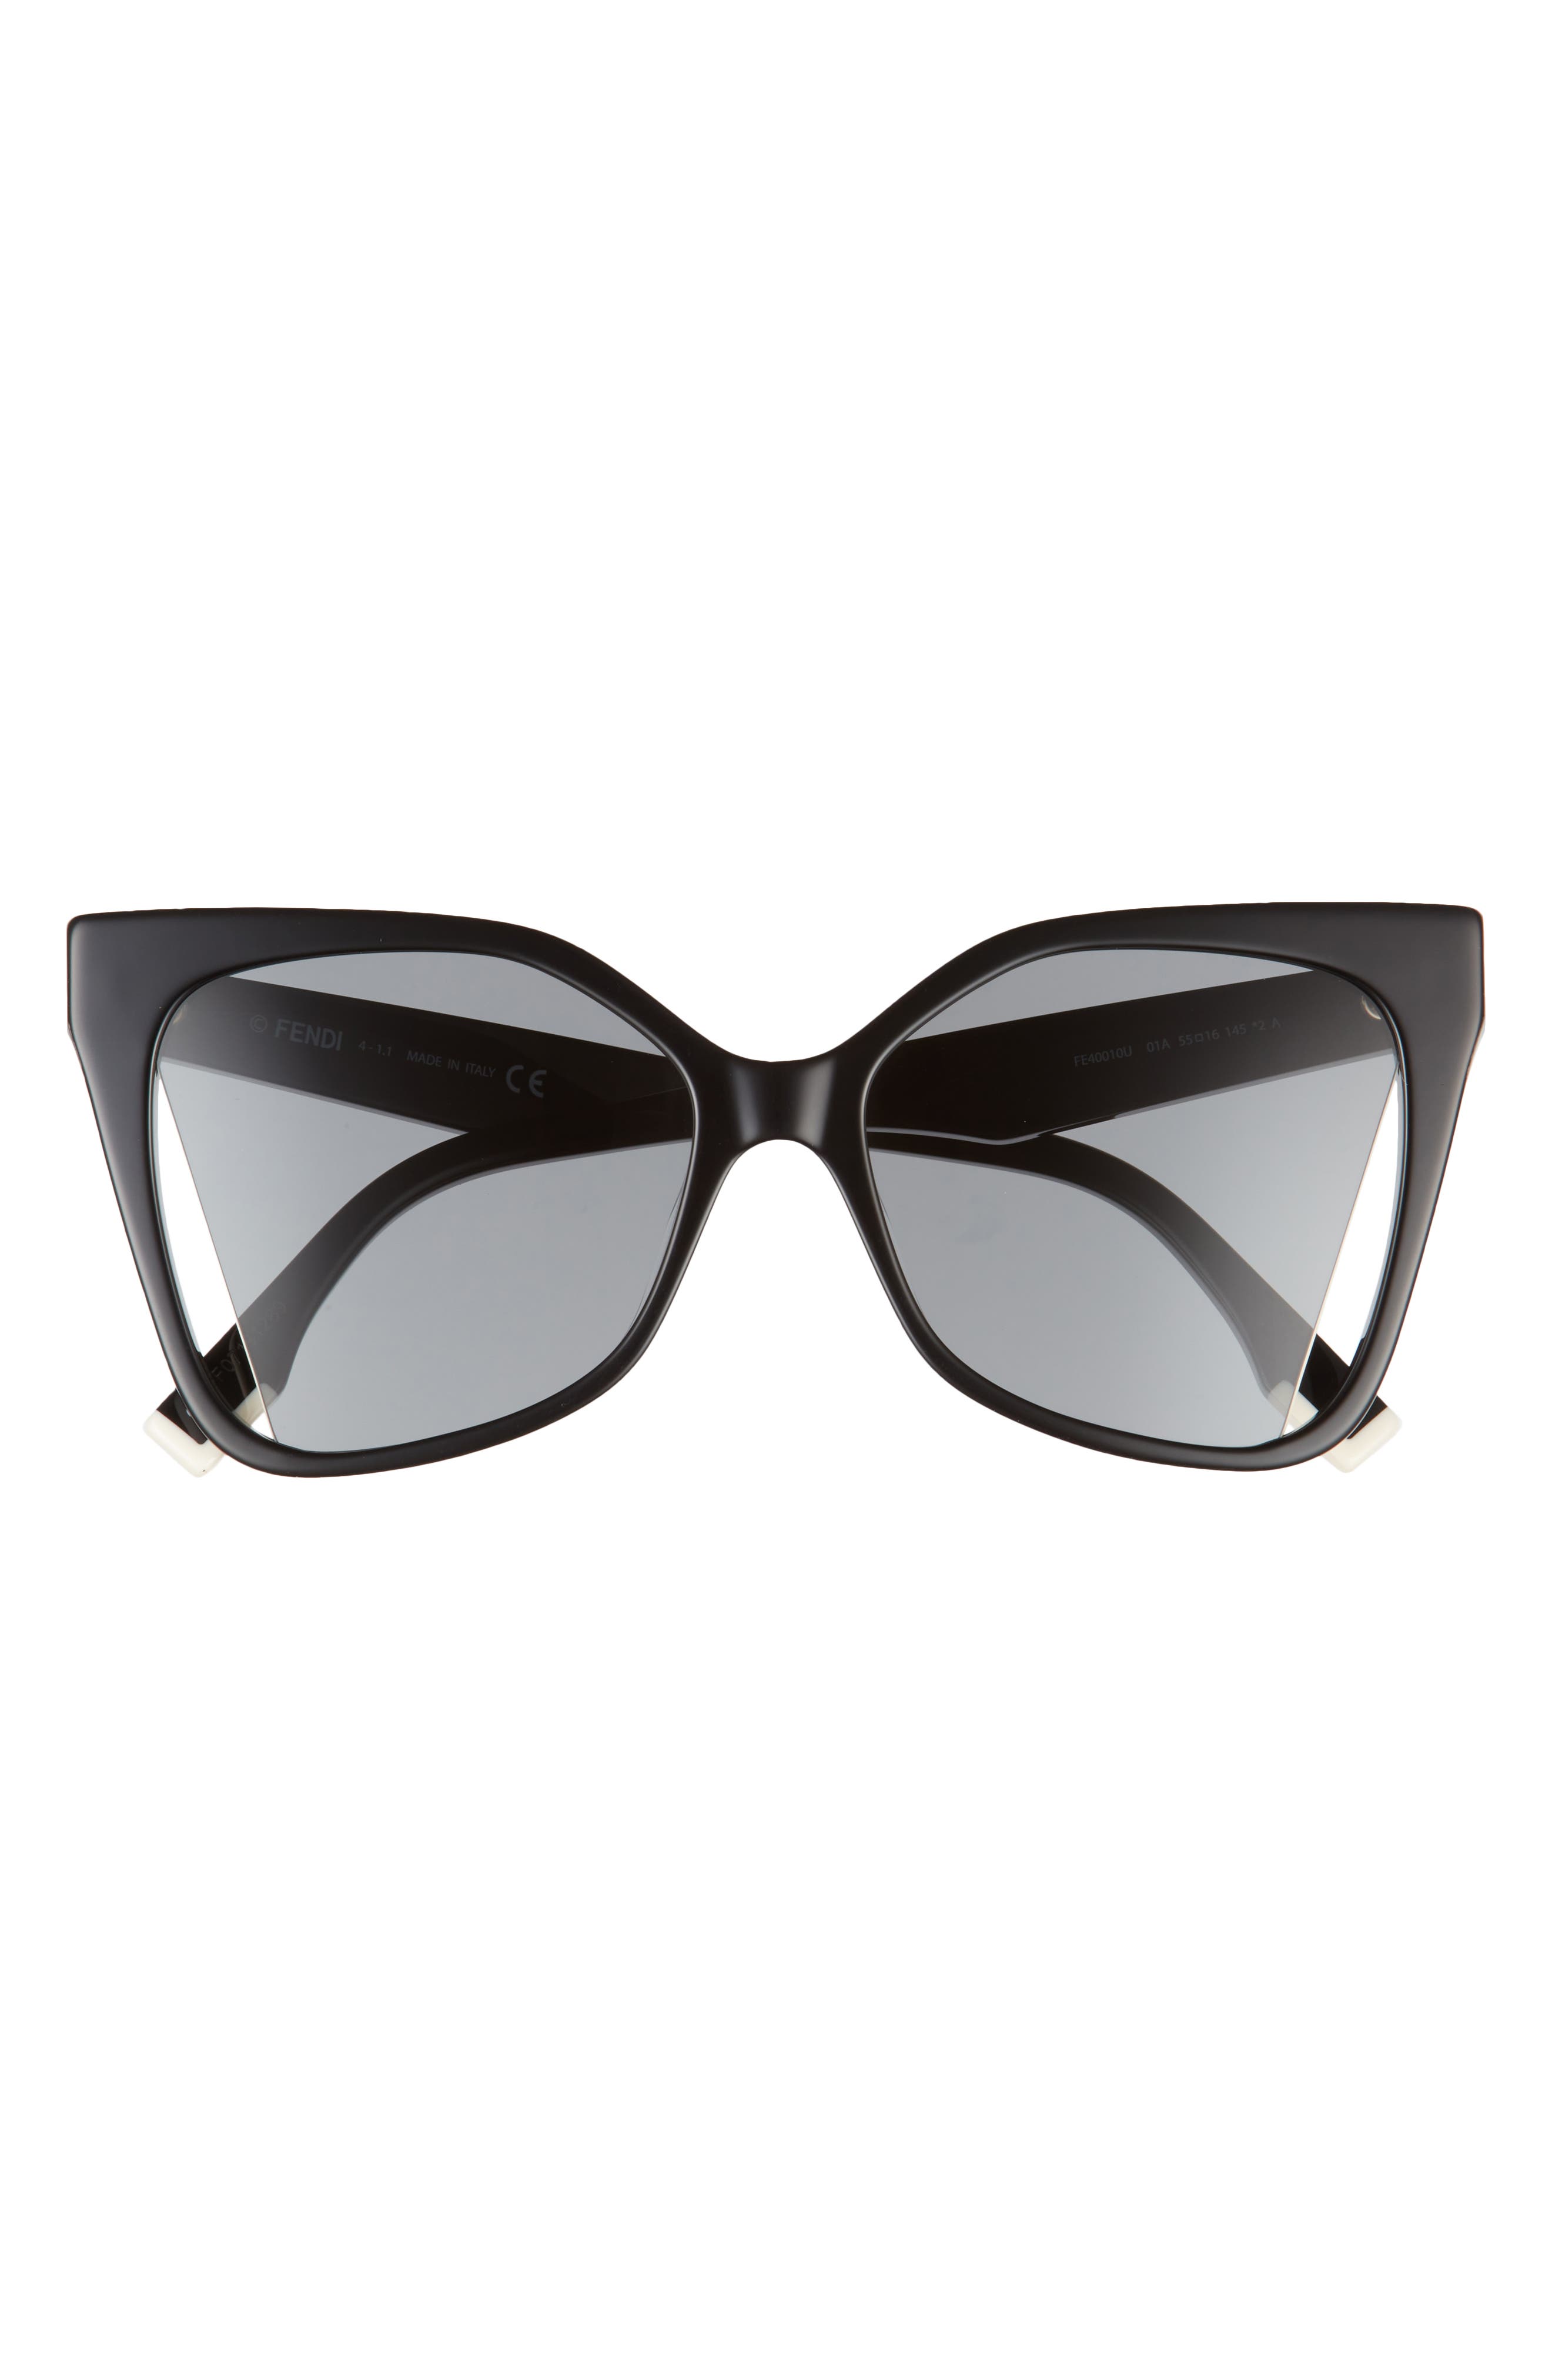 Fendi O'Lock - Gradient brown acetate sunglasses